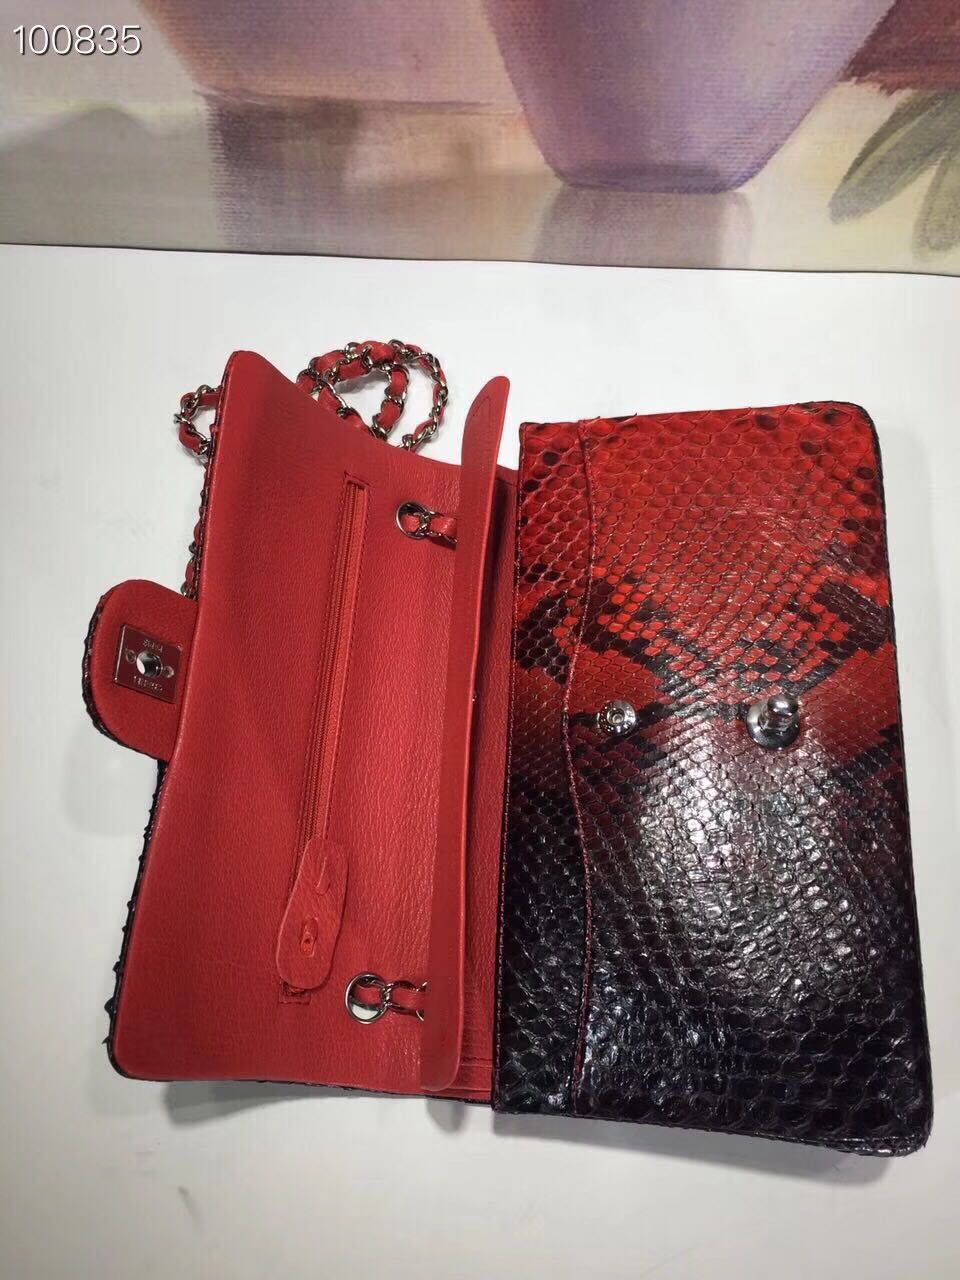 Chanel Classic Handbag Python Leather A01112 Black&Red